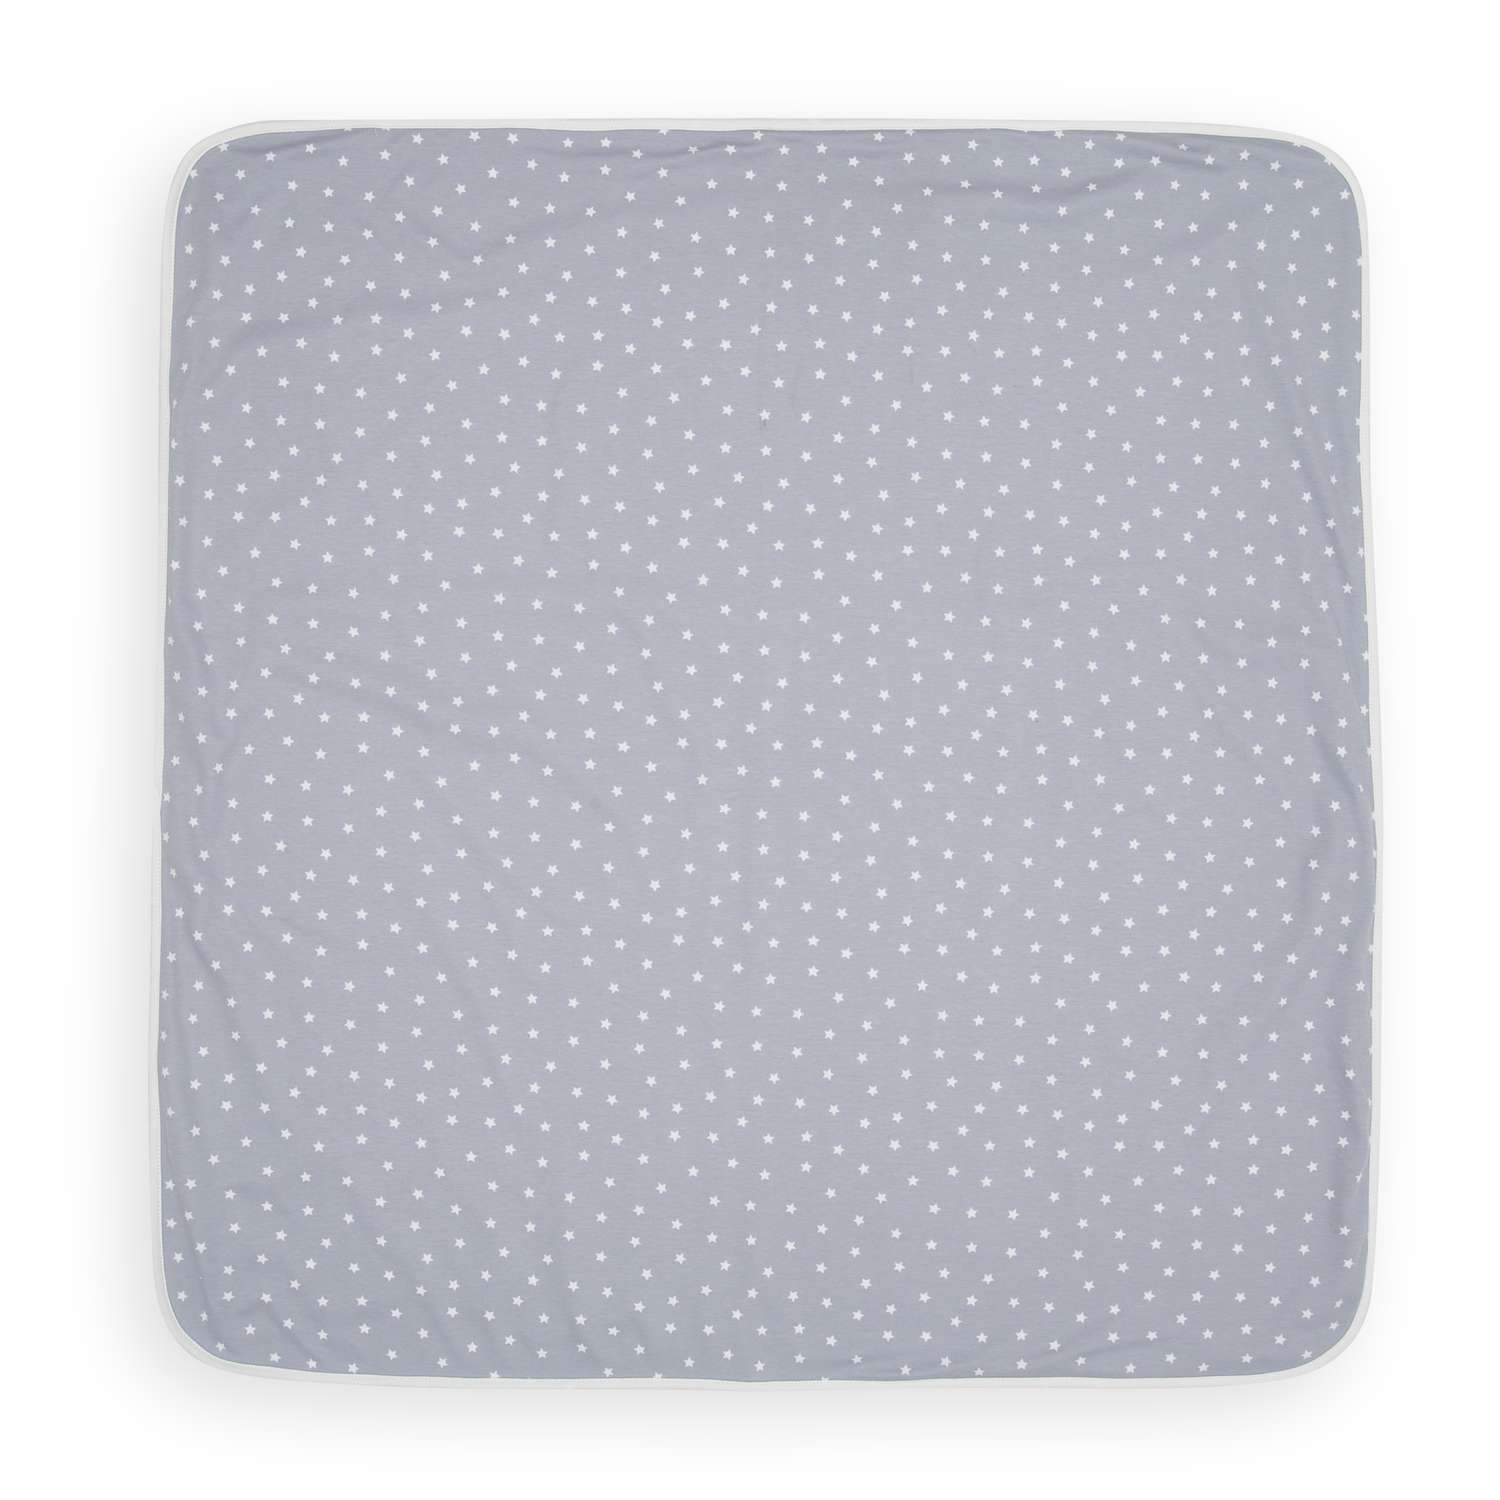 Одеяло-пеленка CHOUPETTE хлопковое 80х80 см - фото 2